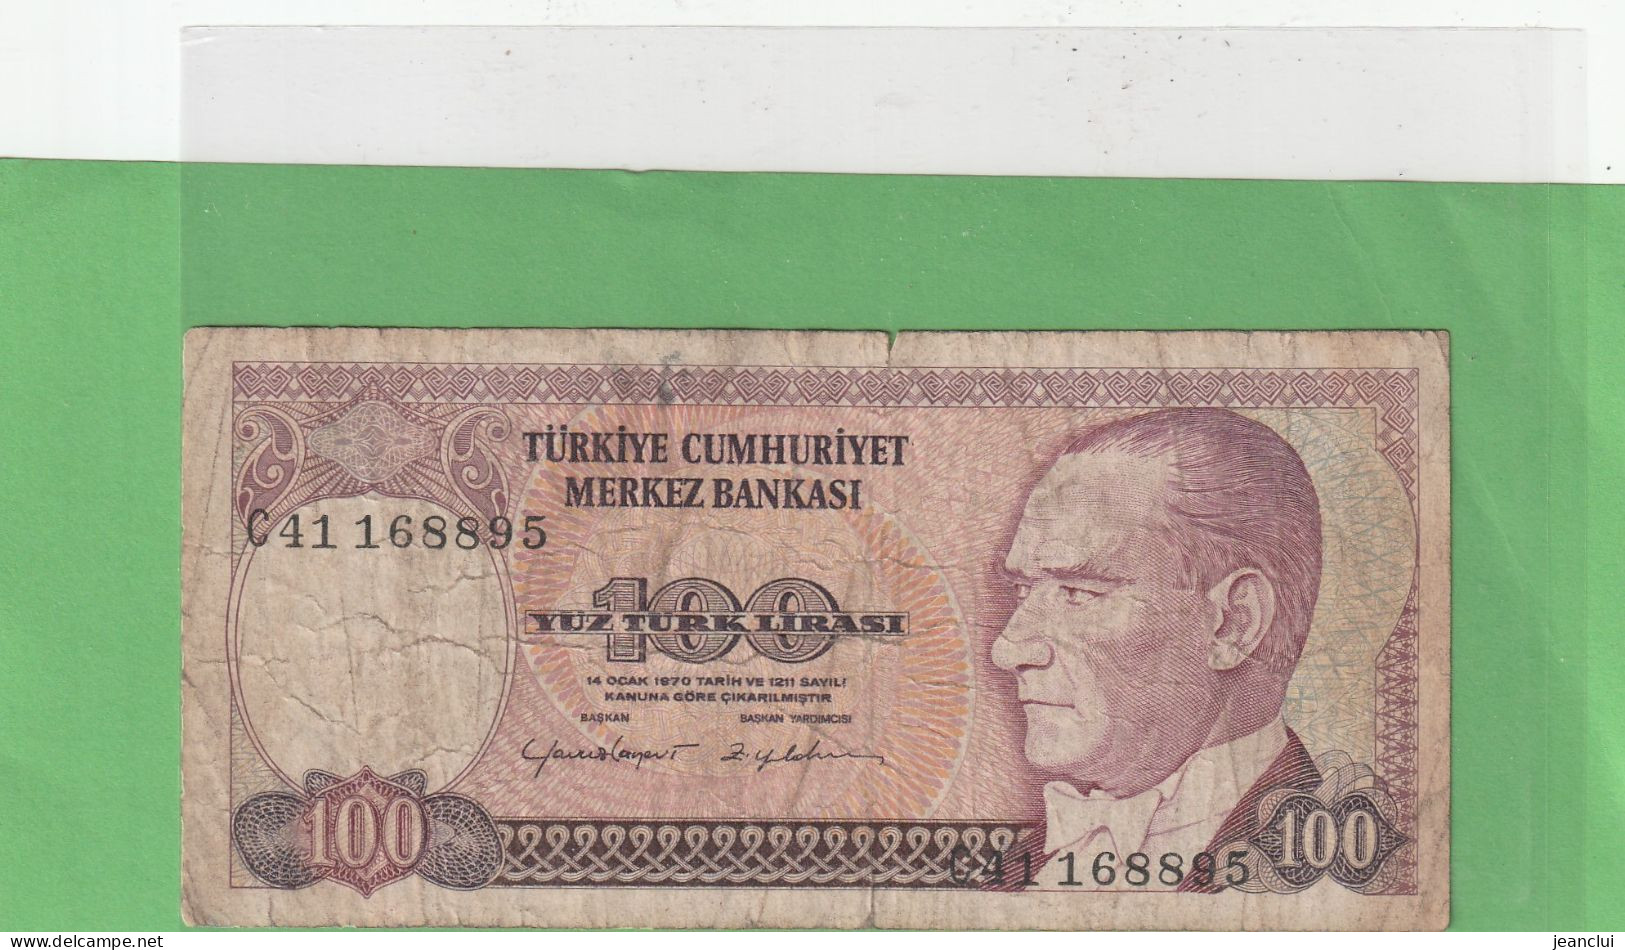 TURKIYE CUMHURIYET MERKEZ BANKASI . 100 LIRA . 14 OCAK 1970  . N°  C41 168895 .  2 SCANNES  .  BILLET USITE - Turkije